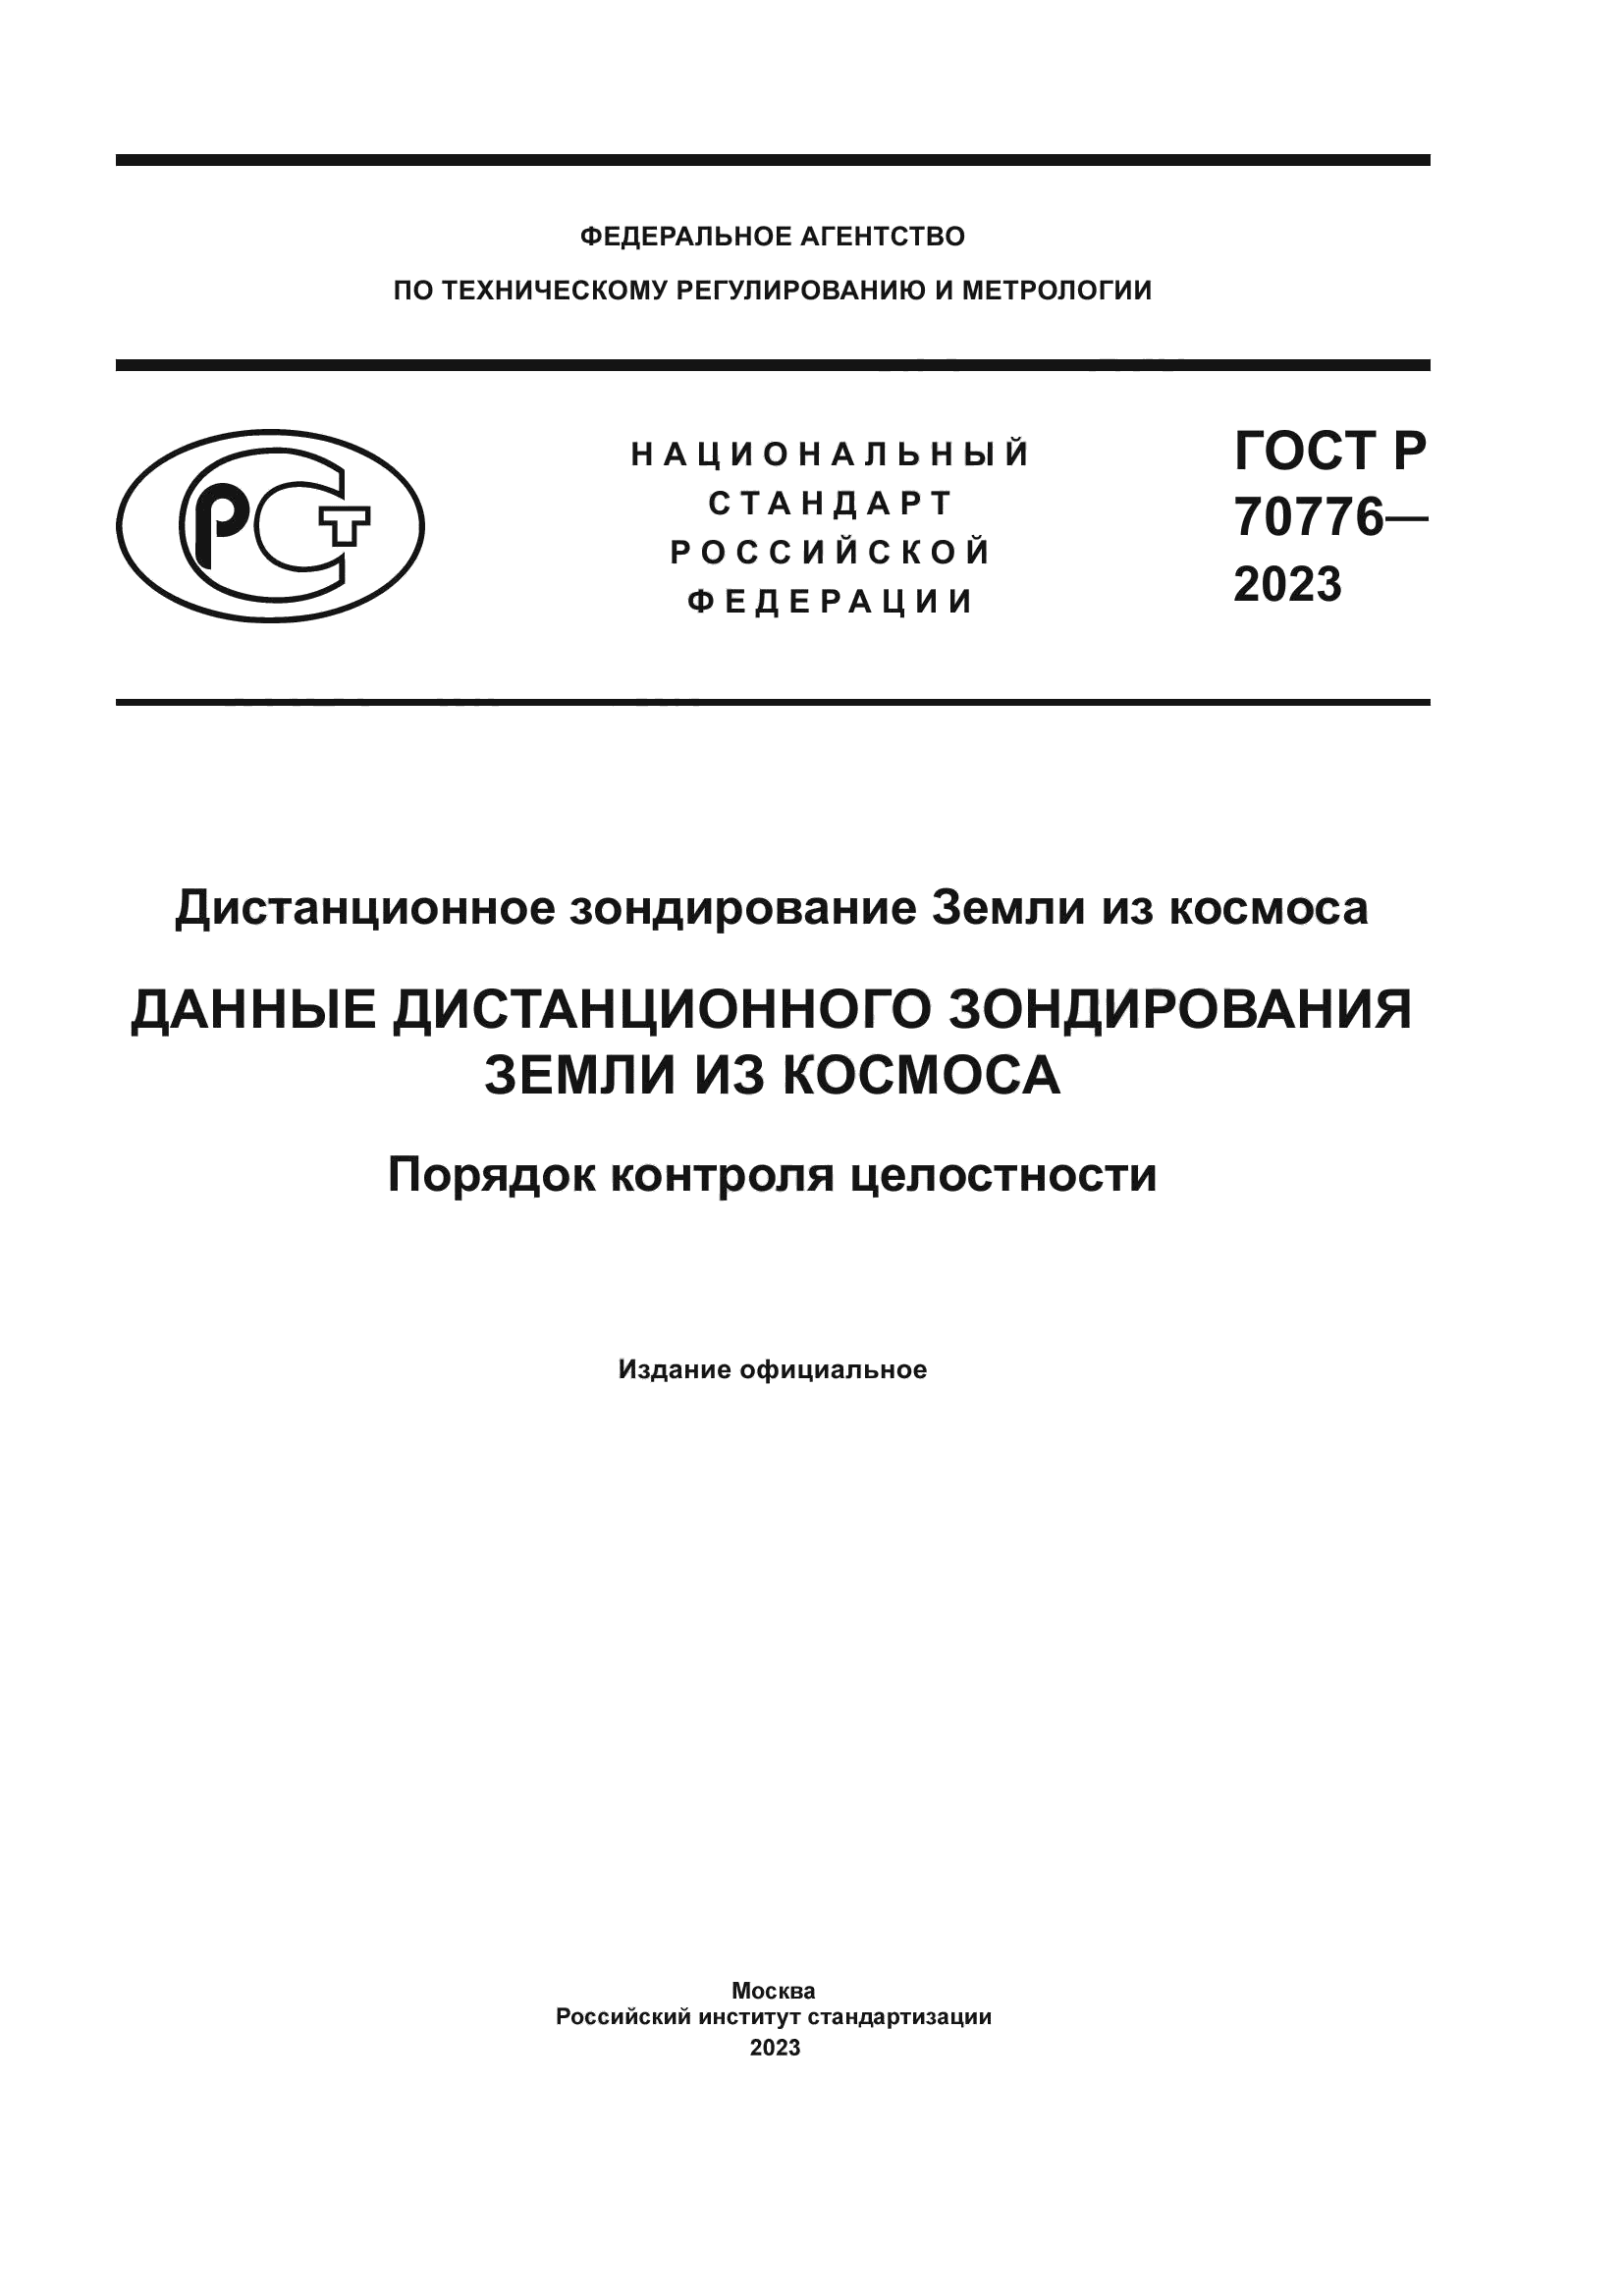 ГОСТ Р 70776-2023